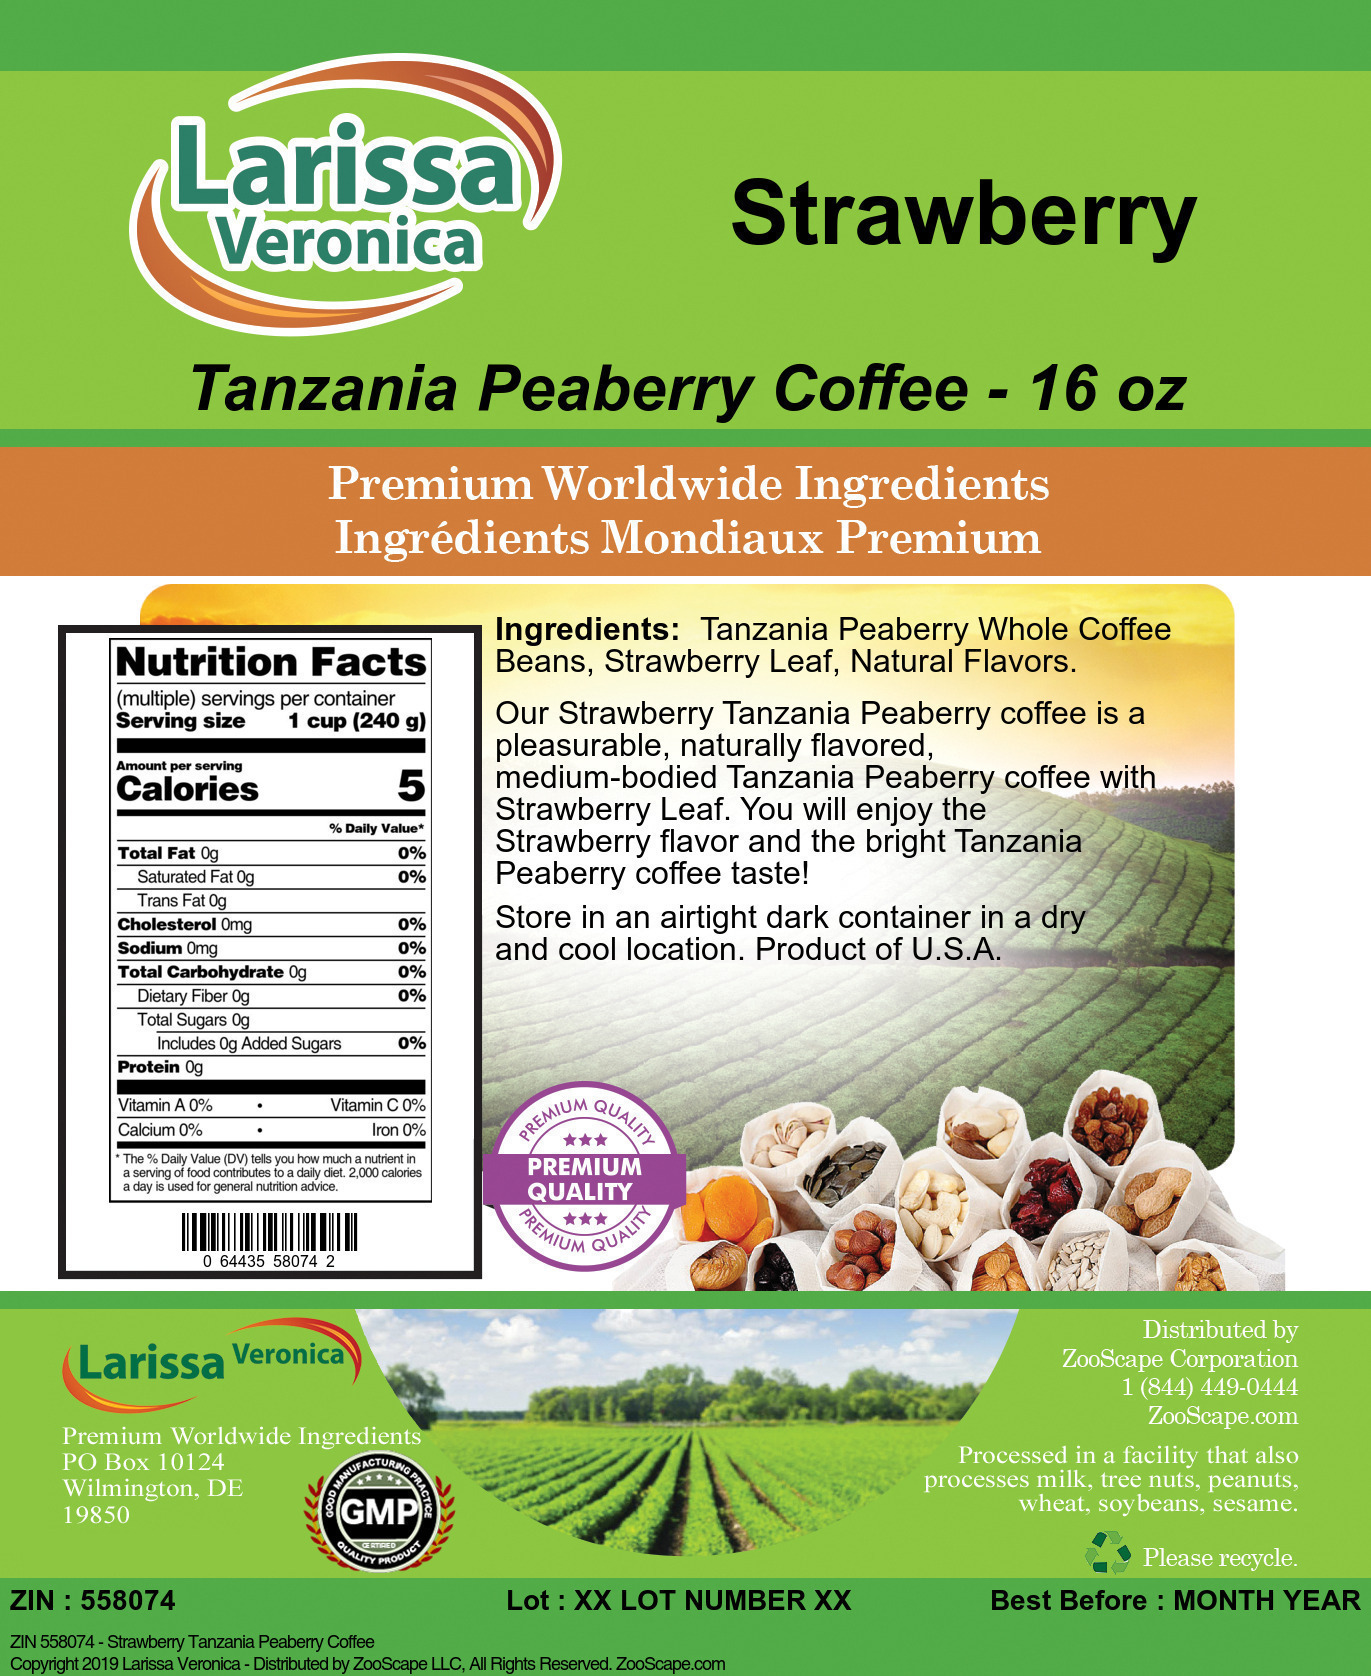 Strawberry Tanzania Peaberry Coffee - Label